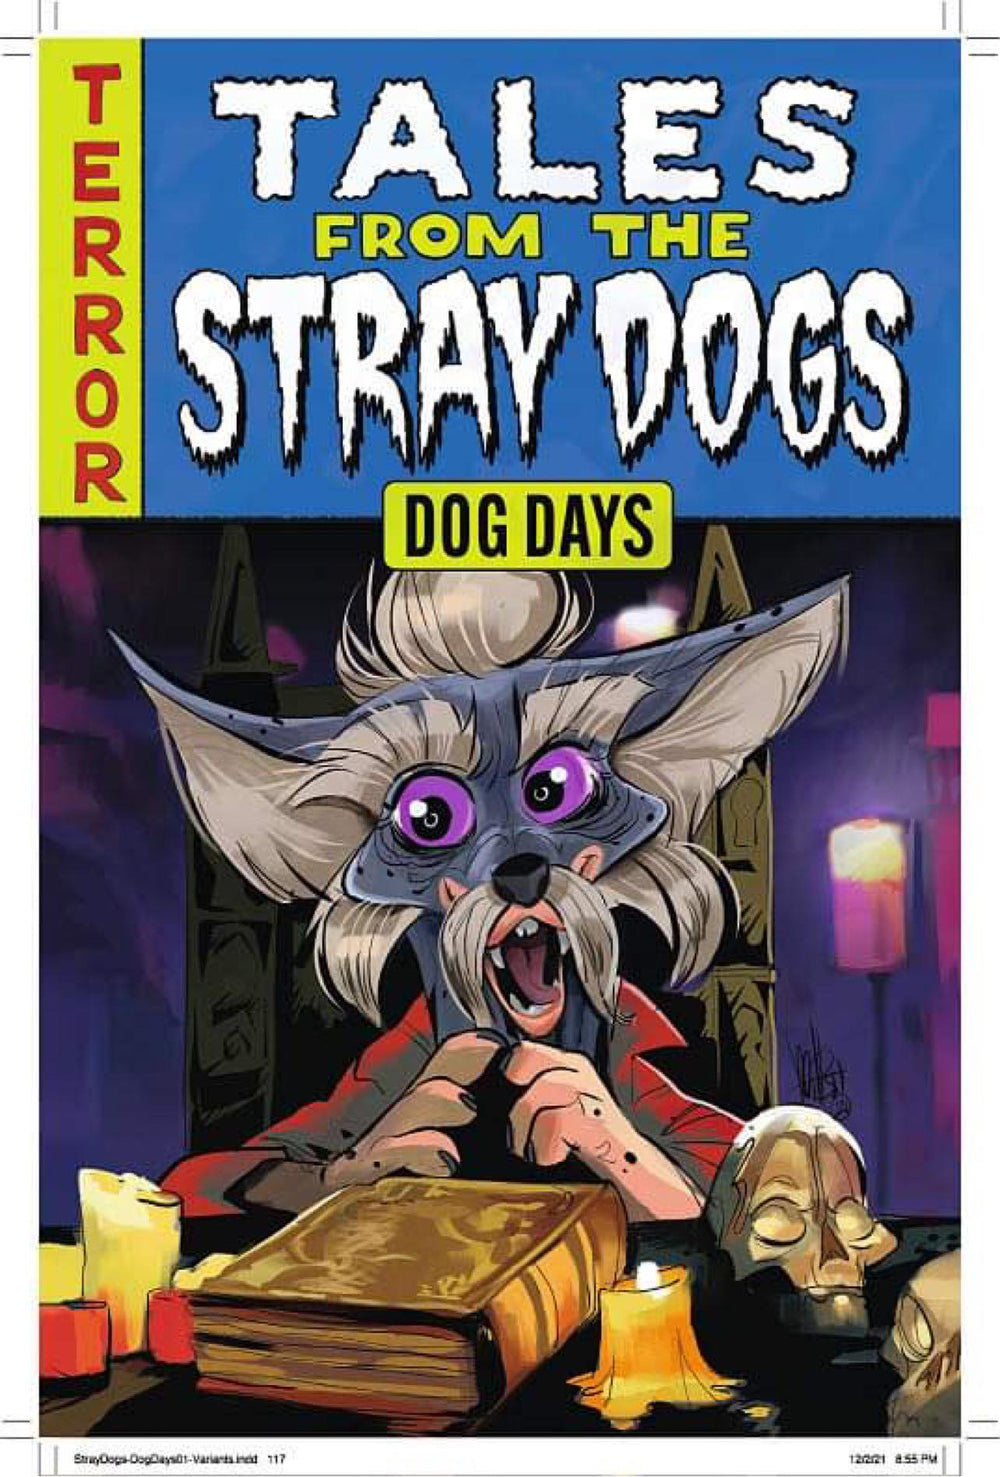 STRAY DOGS DOG DAYS #1 Mel Milton 